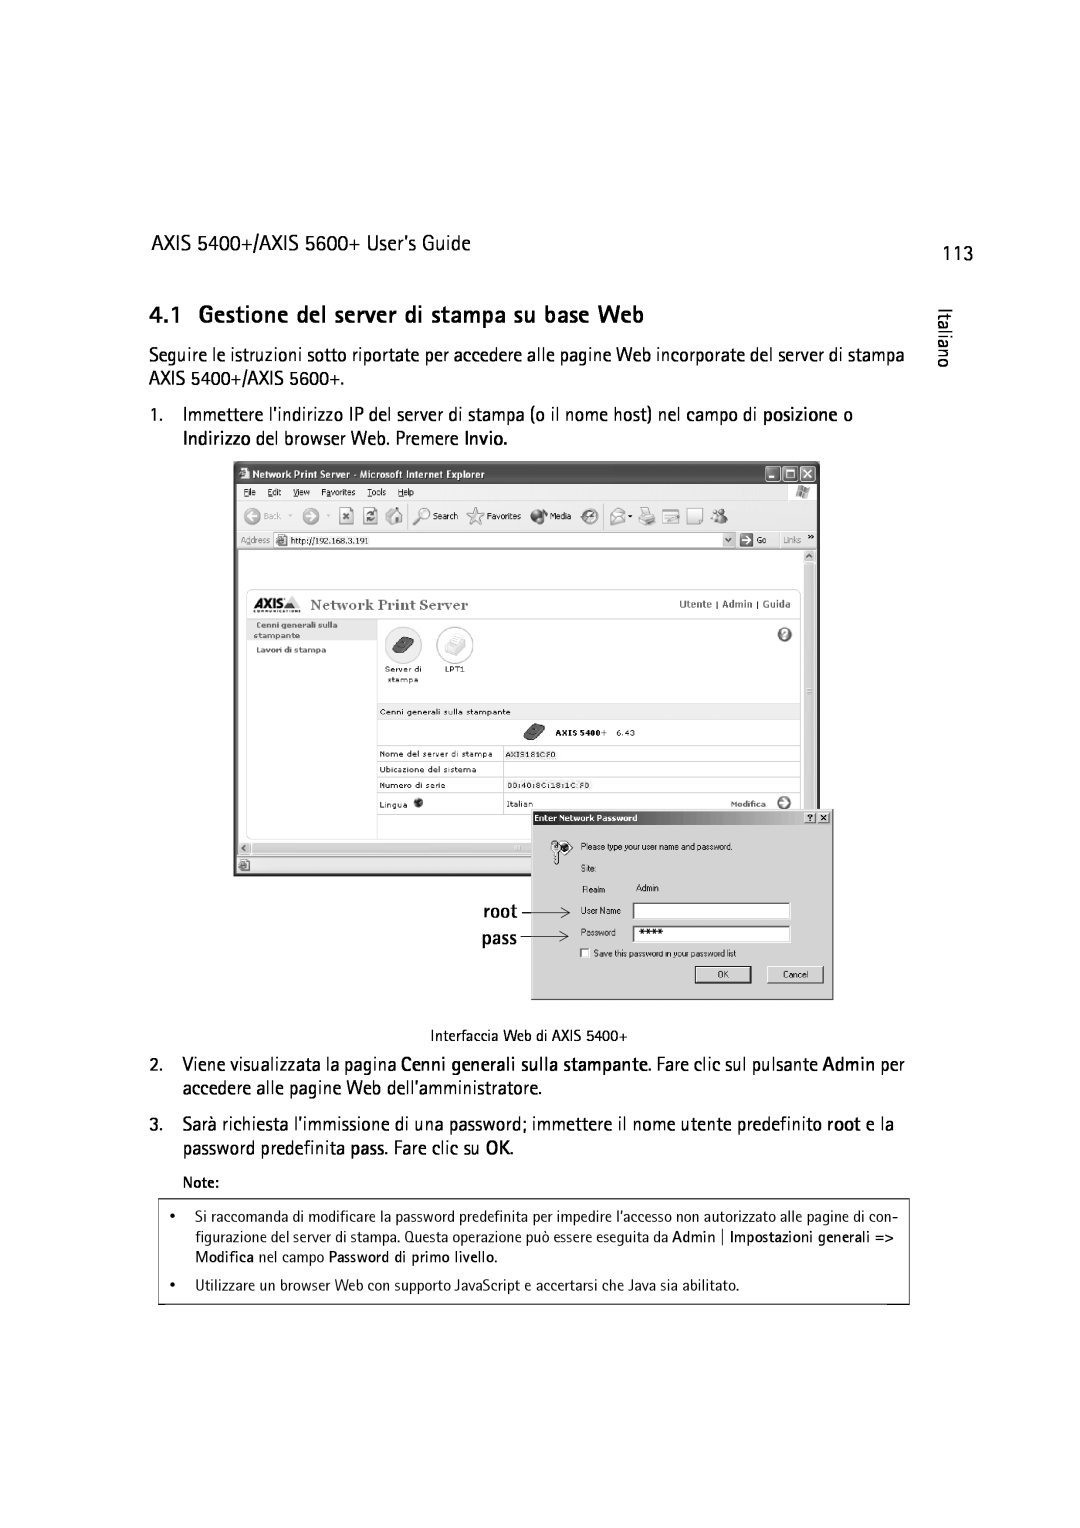 Dell manual Gestione del server di stampa su base Web, AXIS 5400+/AXIS 5600+ User’s Guide, root pass 